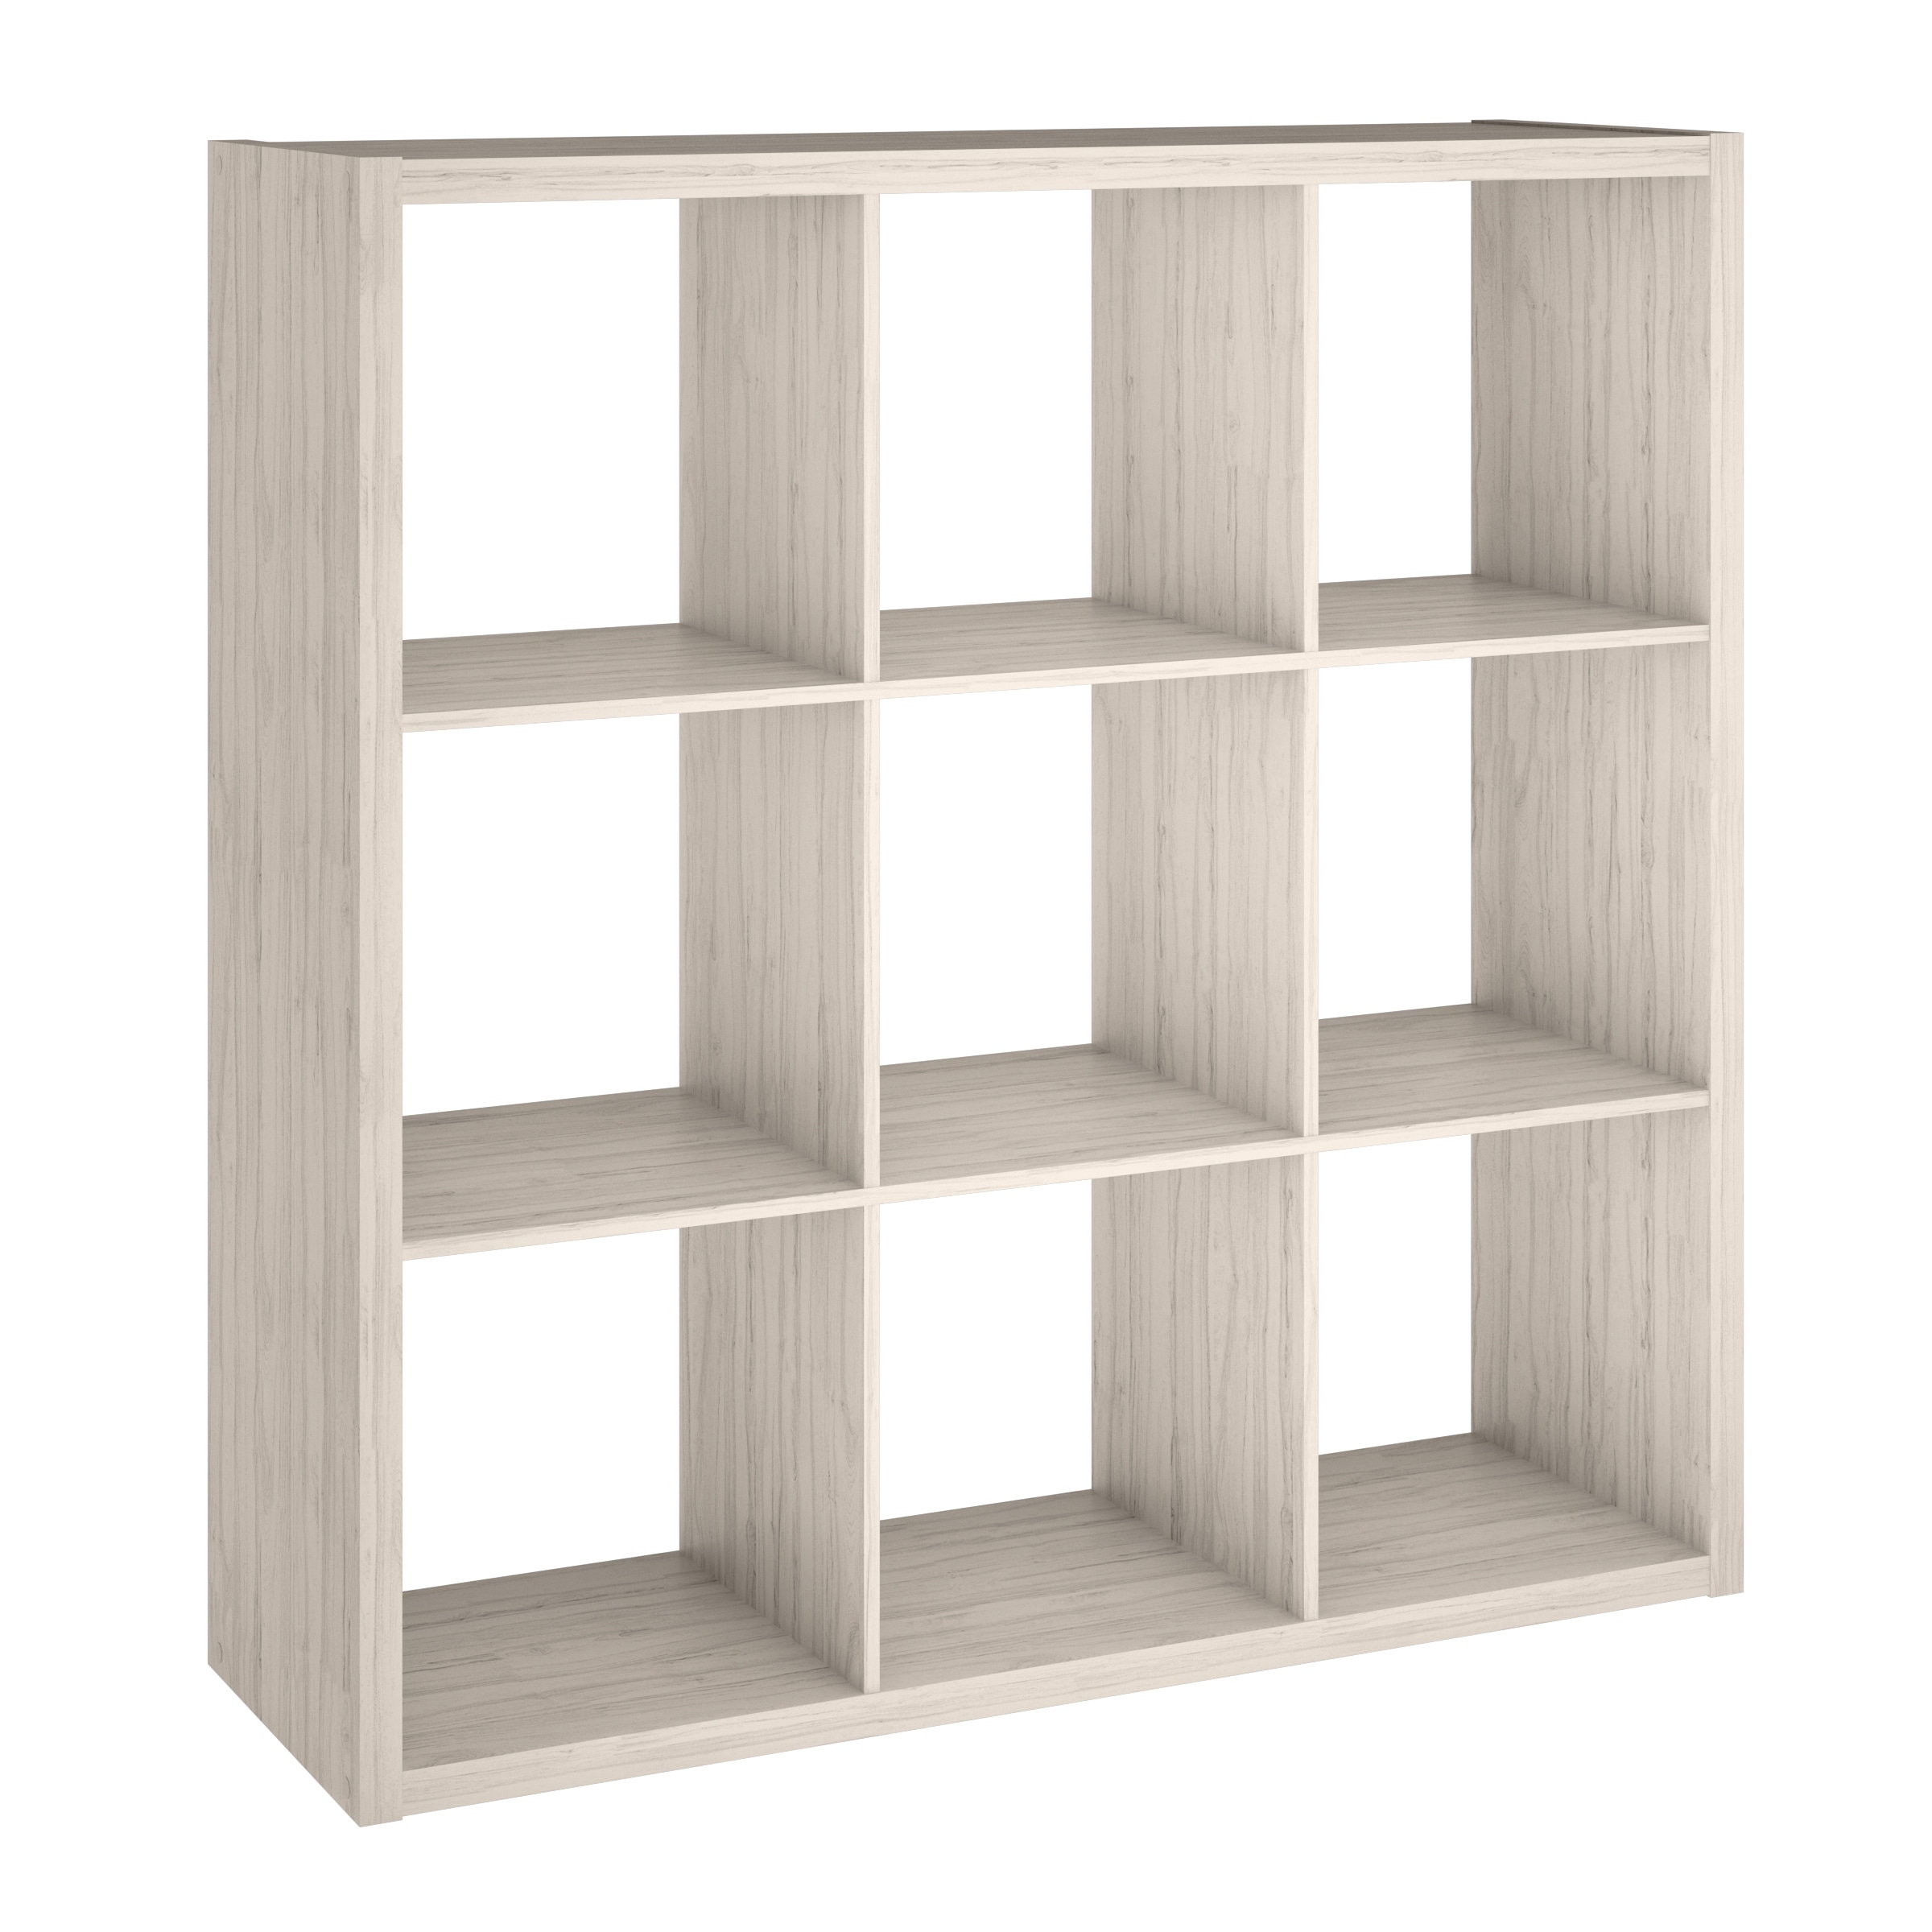 ClosetMaid 9-Cube Storage Organizer Dark Cherry Wood 20 in H x 24 in W x 14 in 